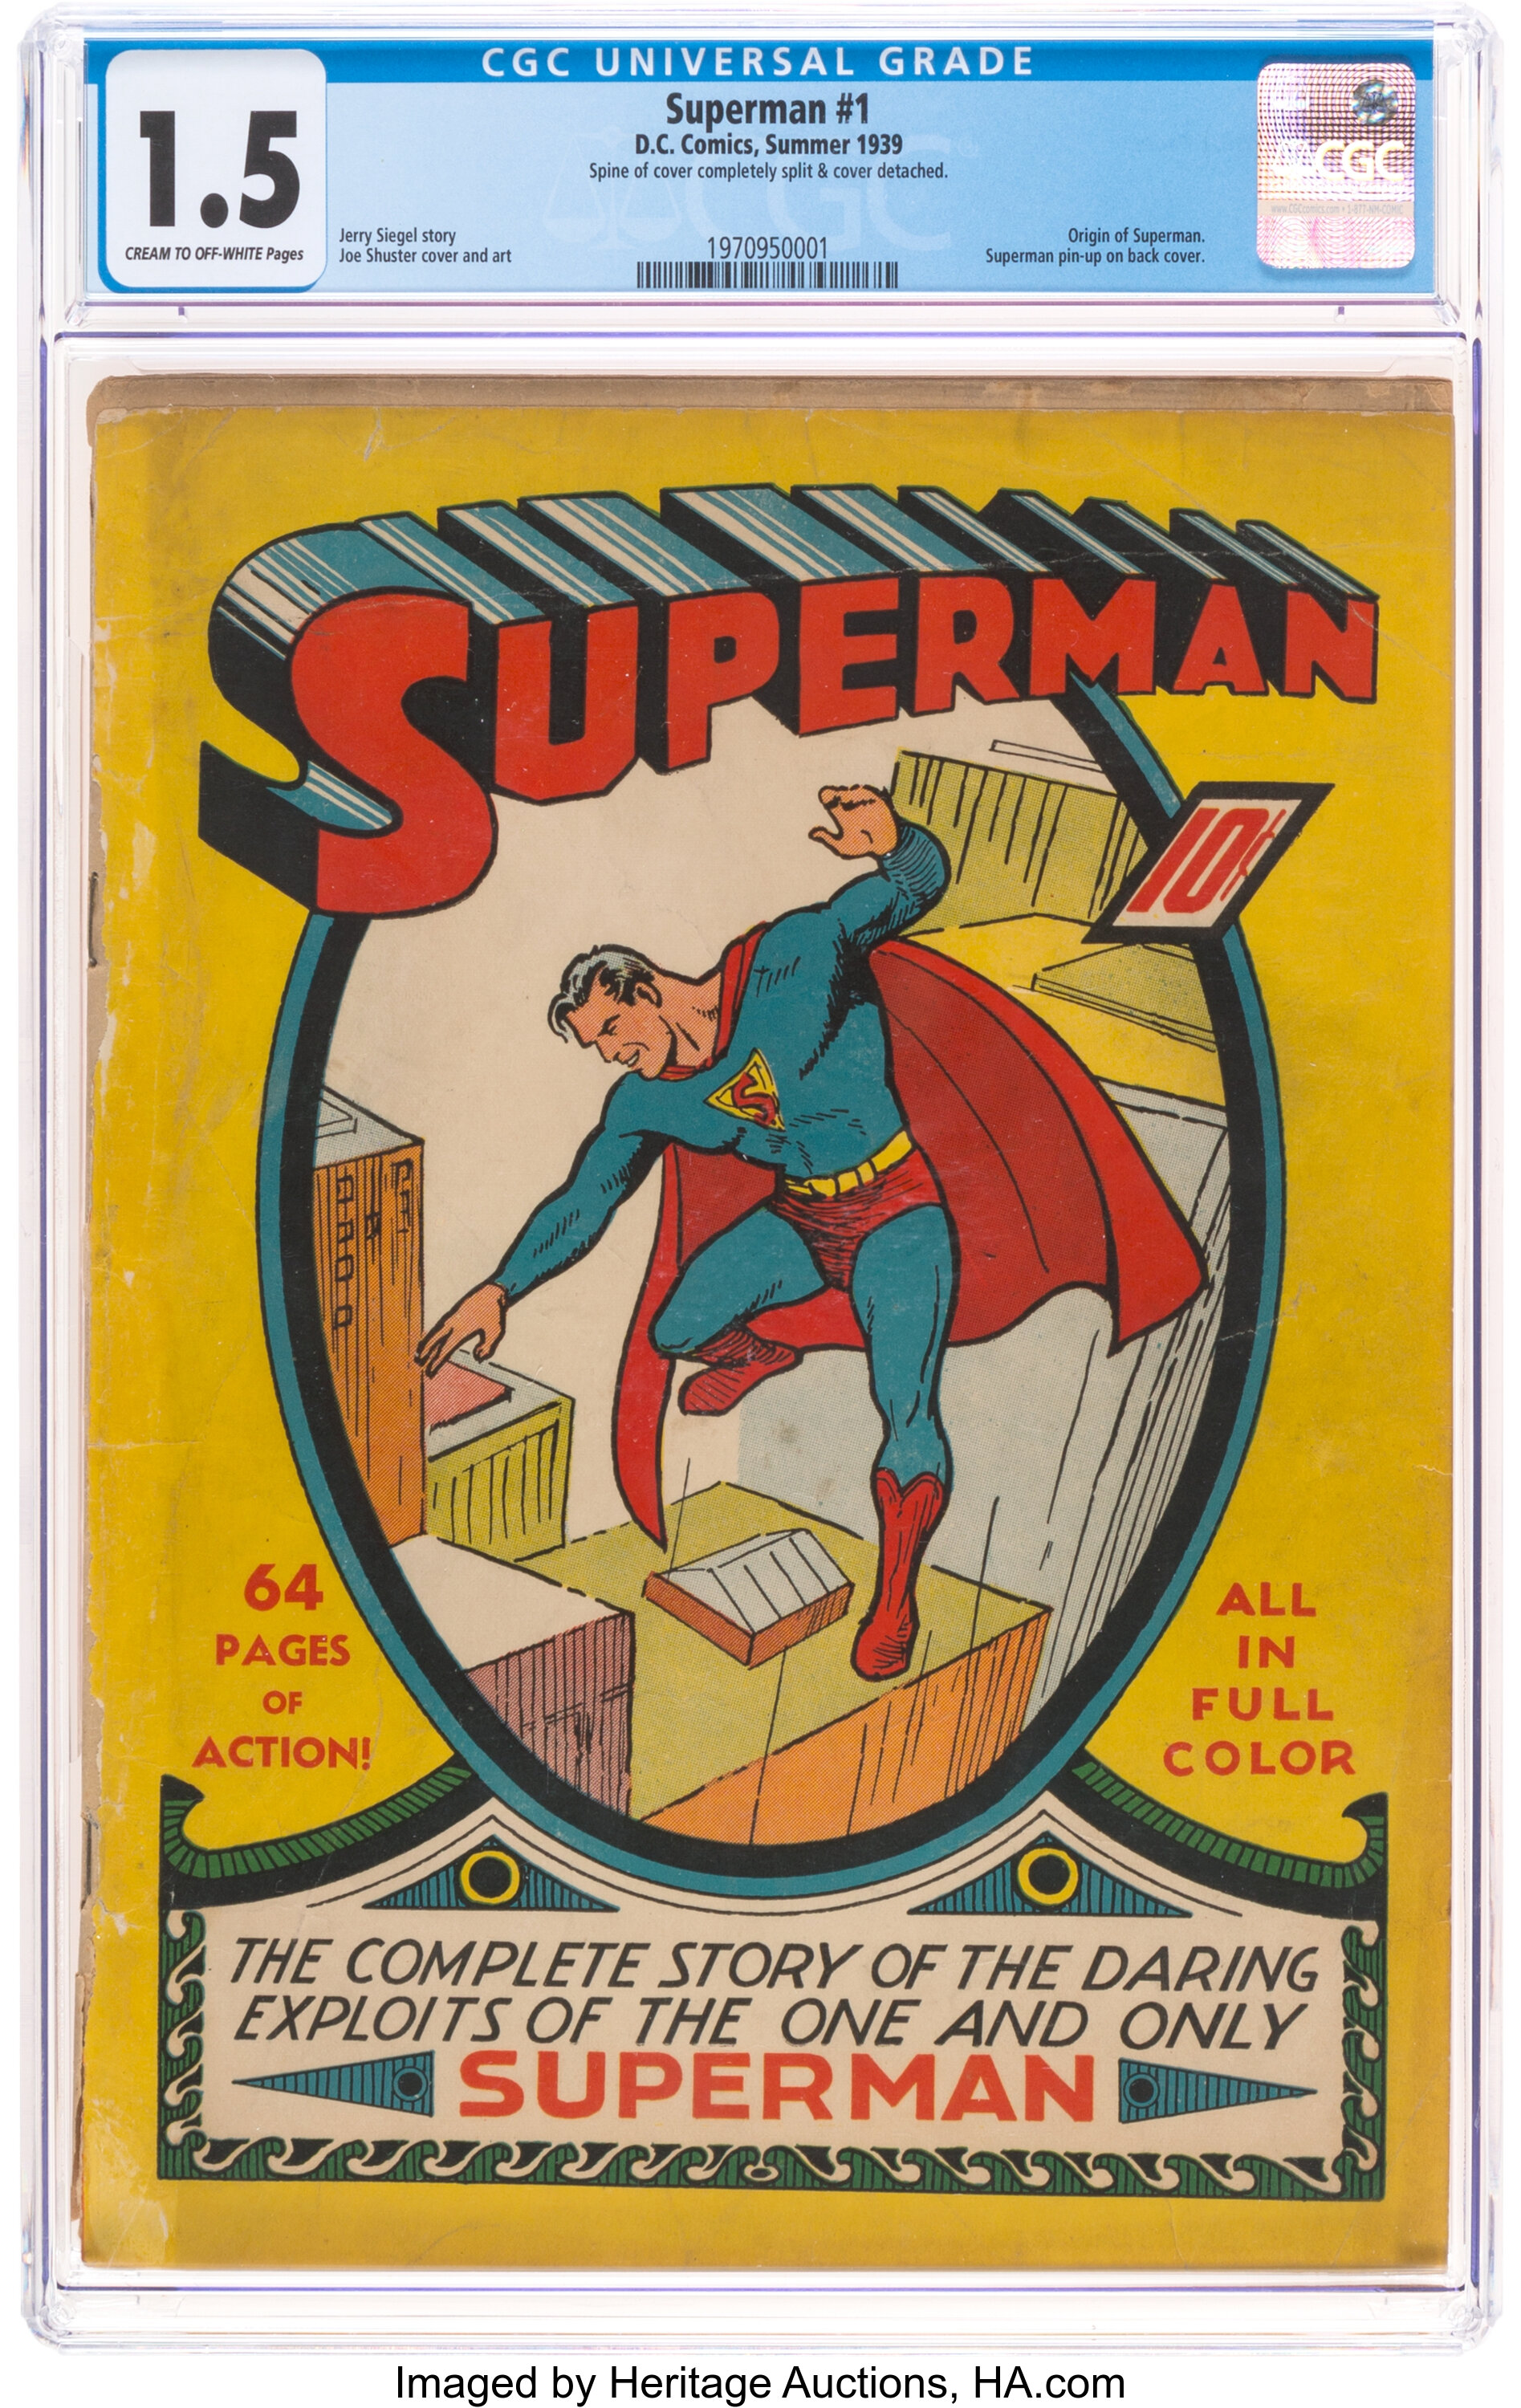 https://www.fortalezadelasoledad.com/imagenes/2022/06/24/superman_1_heritage_auctions_comics_and_comic_art_signature_auction.jpg